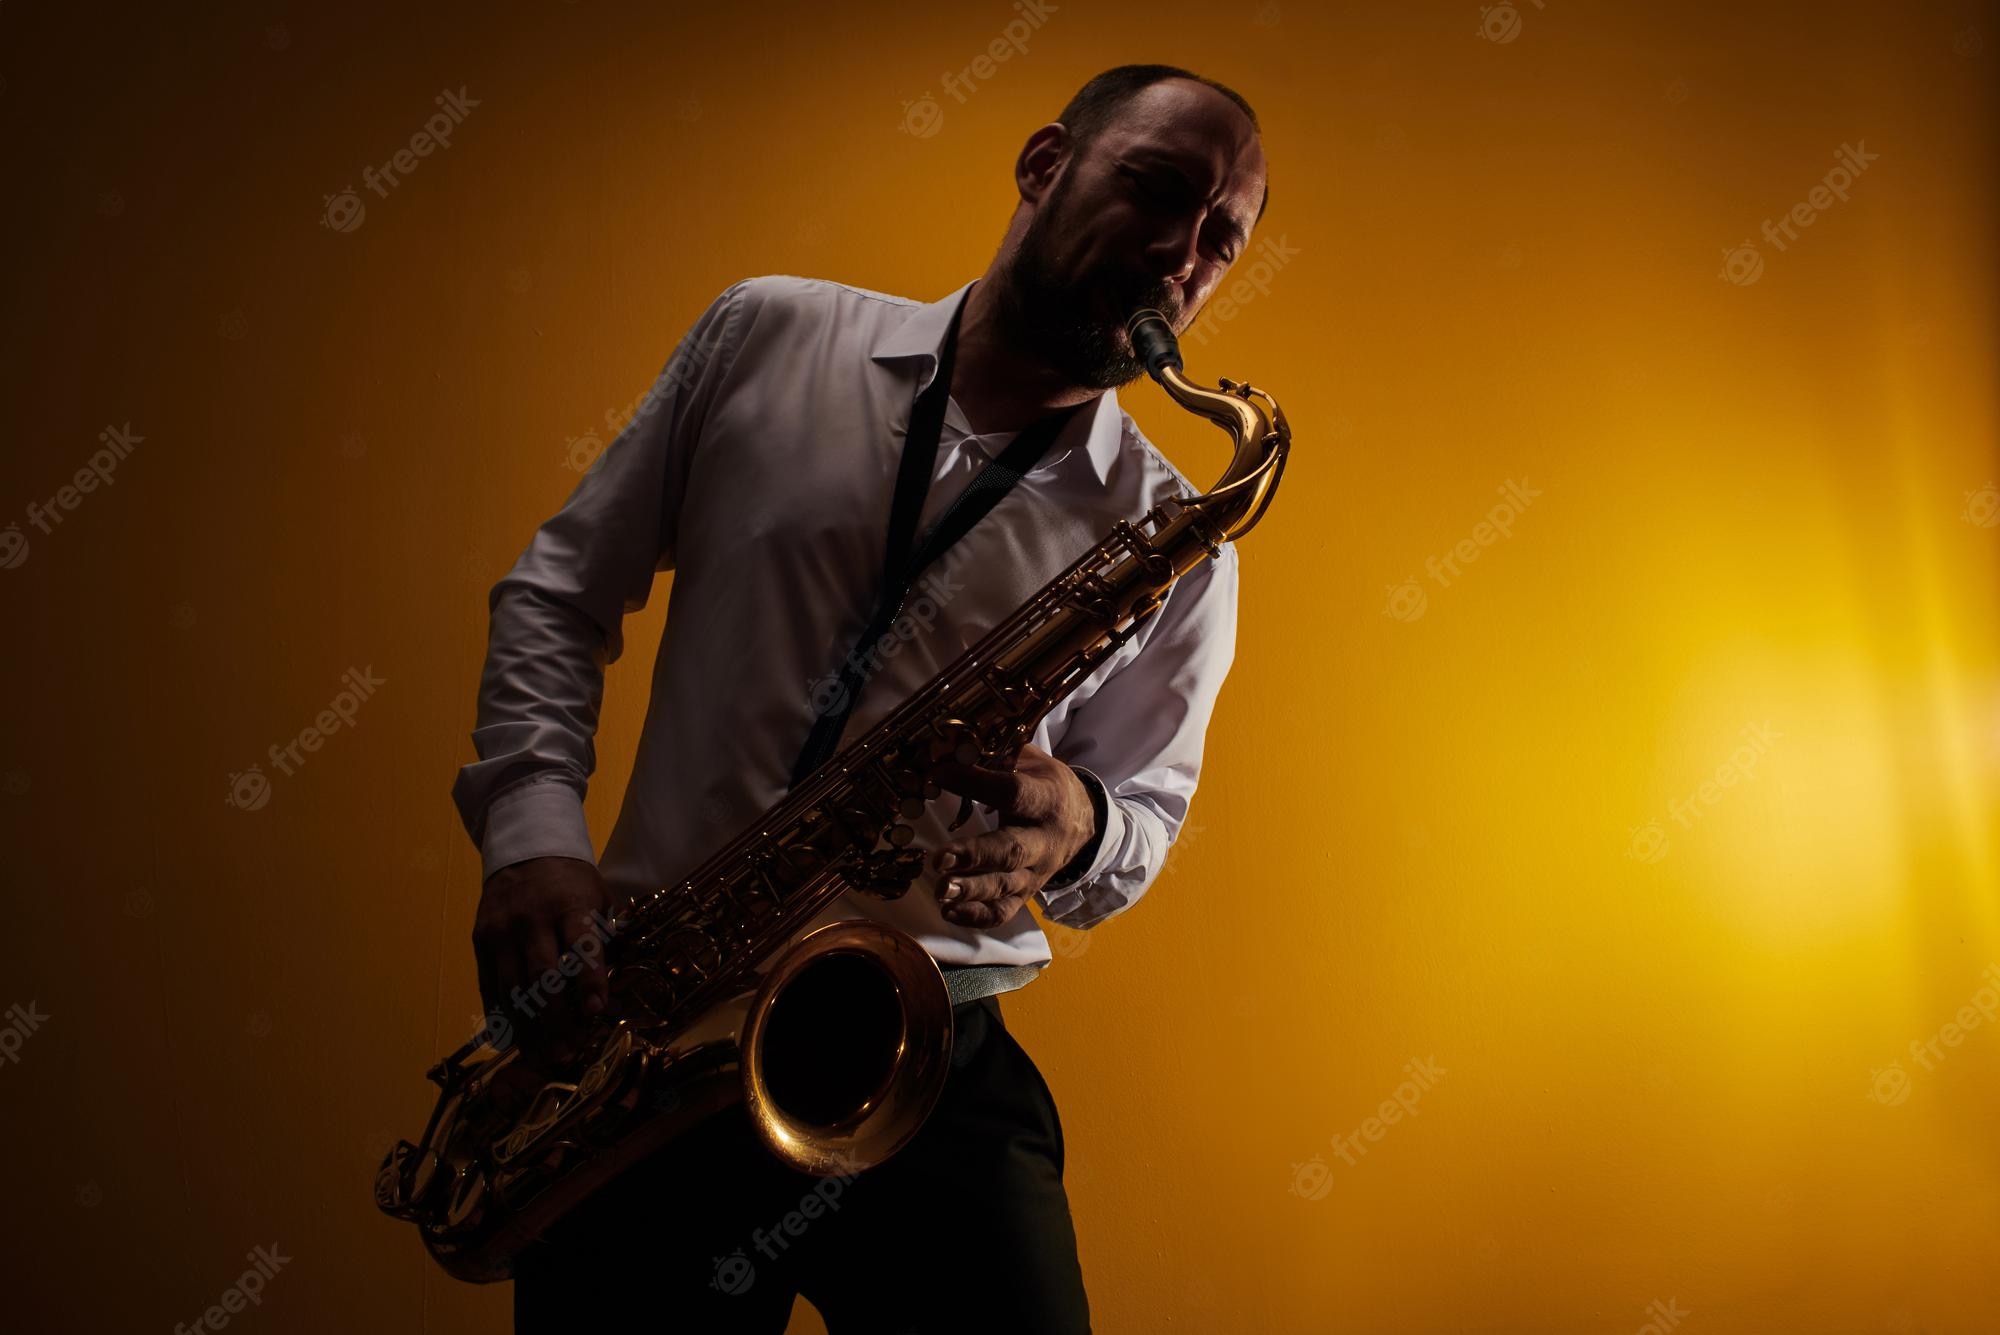 Saxophone Wallpapers